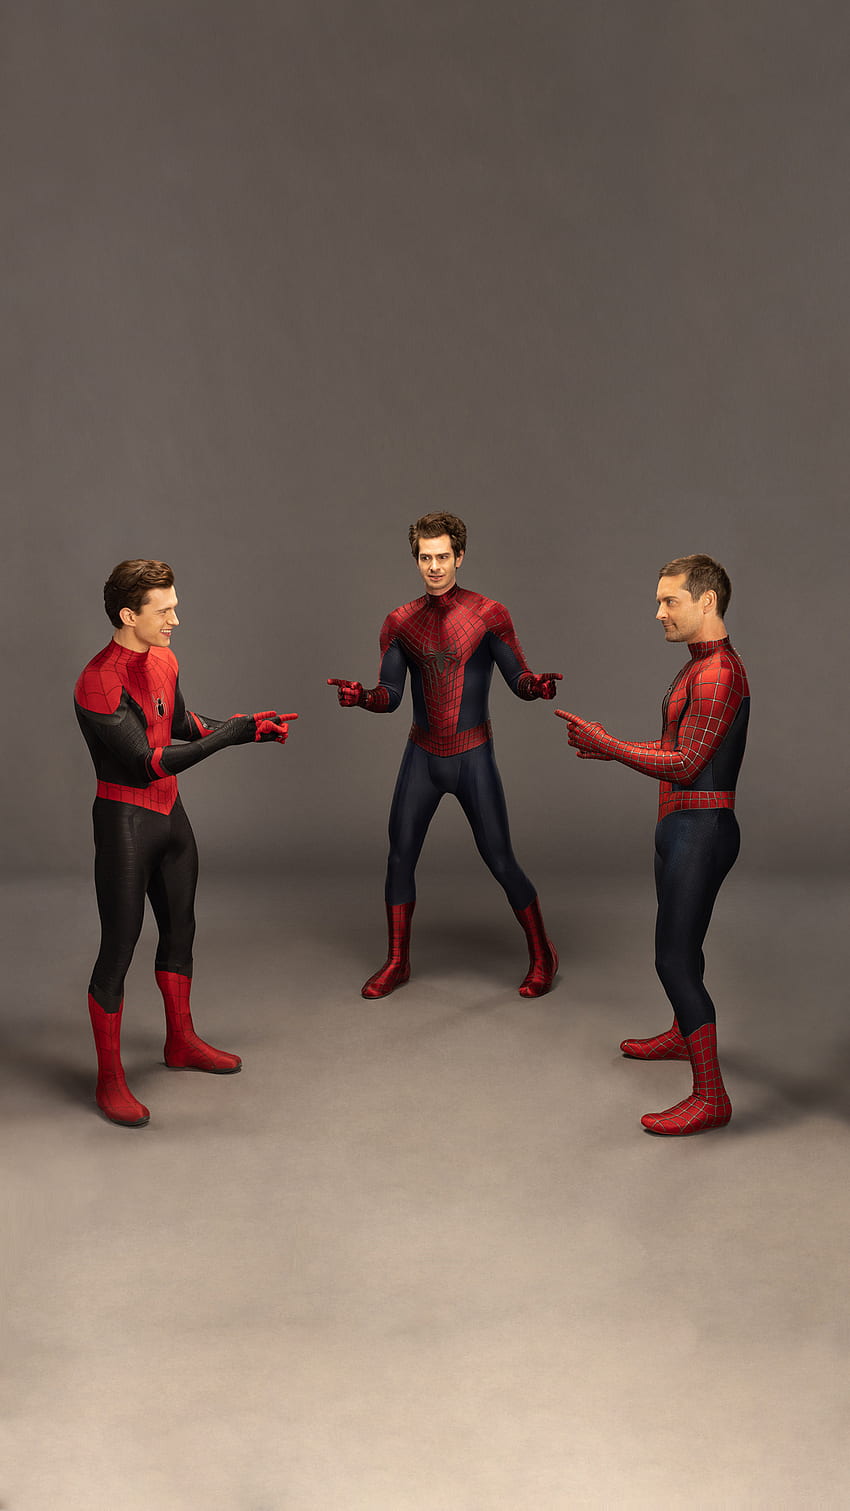 Trois Spider-Man Meme, nowayhome, merveille, film, andrewgarfield, tomholland, pointage, spiderman, tobeymaguire Fond d'écran de téléphone HD